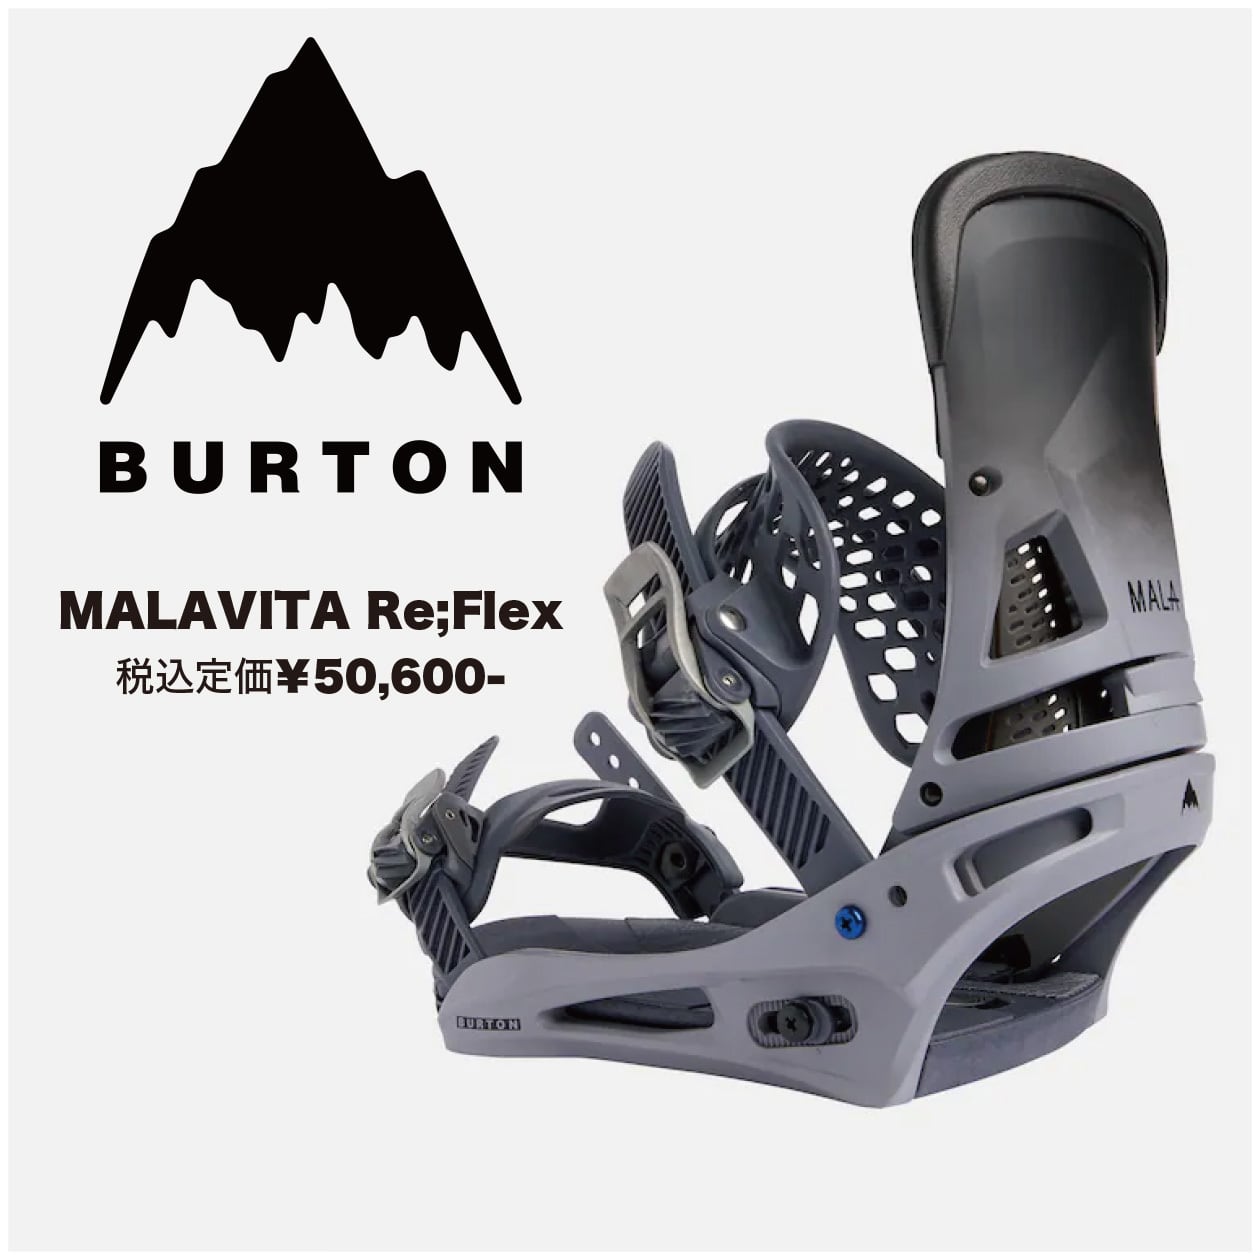 Burton malavita refrex M size 16-17モデル